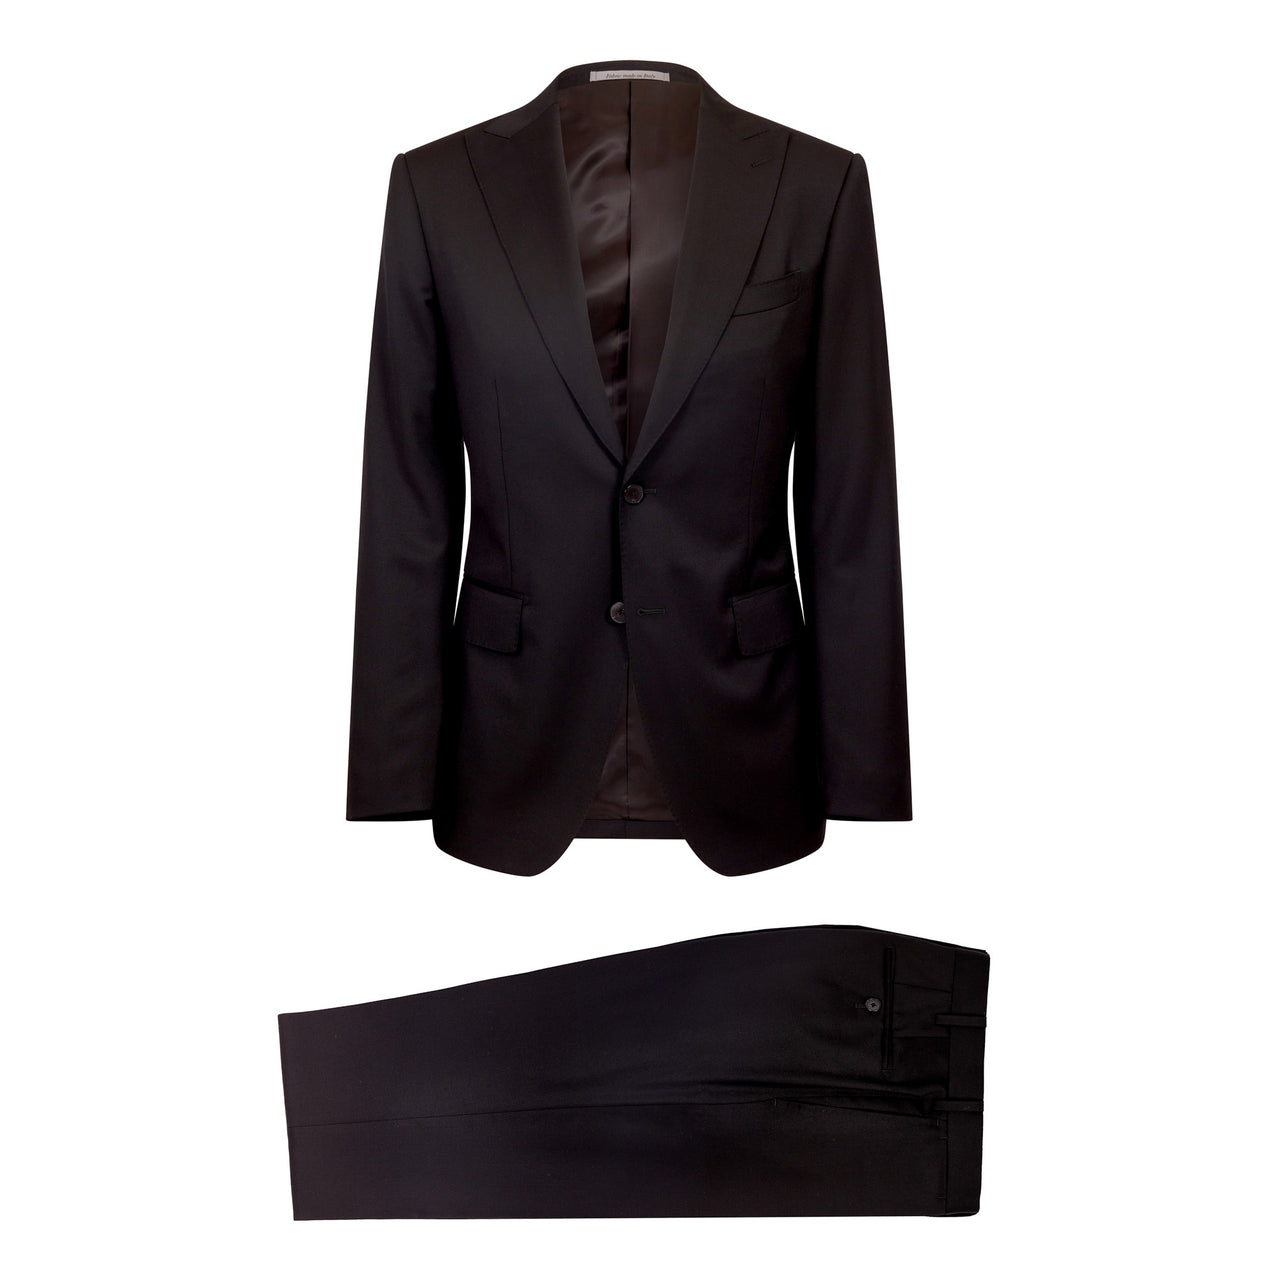 HENRY SARTORIAL Graduate Peak Lapel Suit BLACK REG